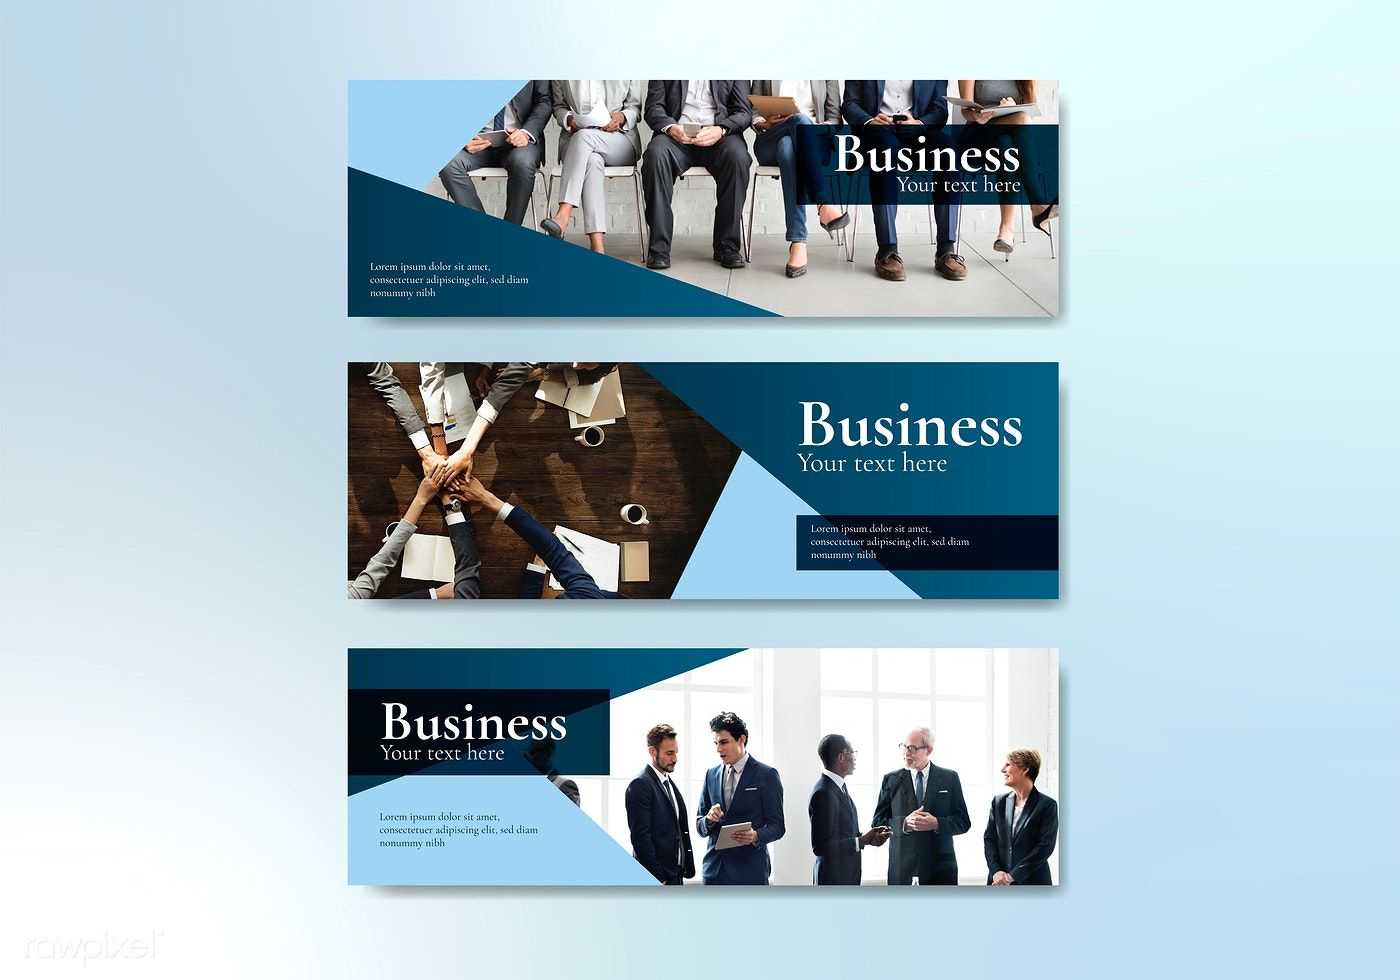 Business Website Banner Design Vector | Free Image Inside Photography Banner Template